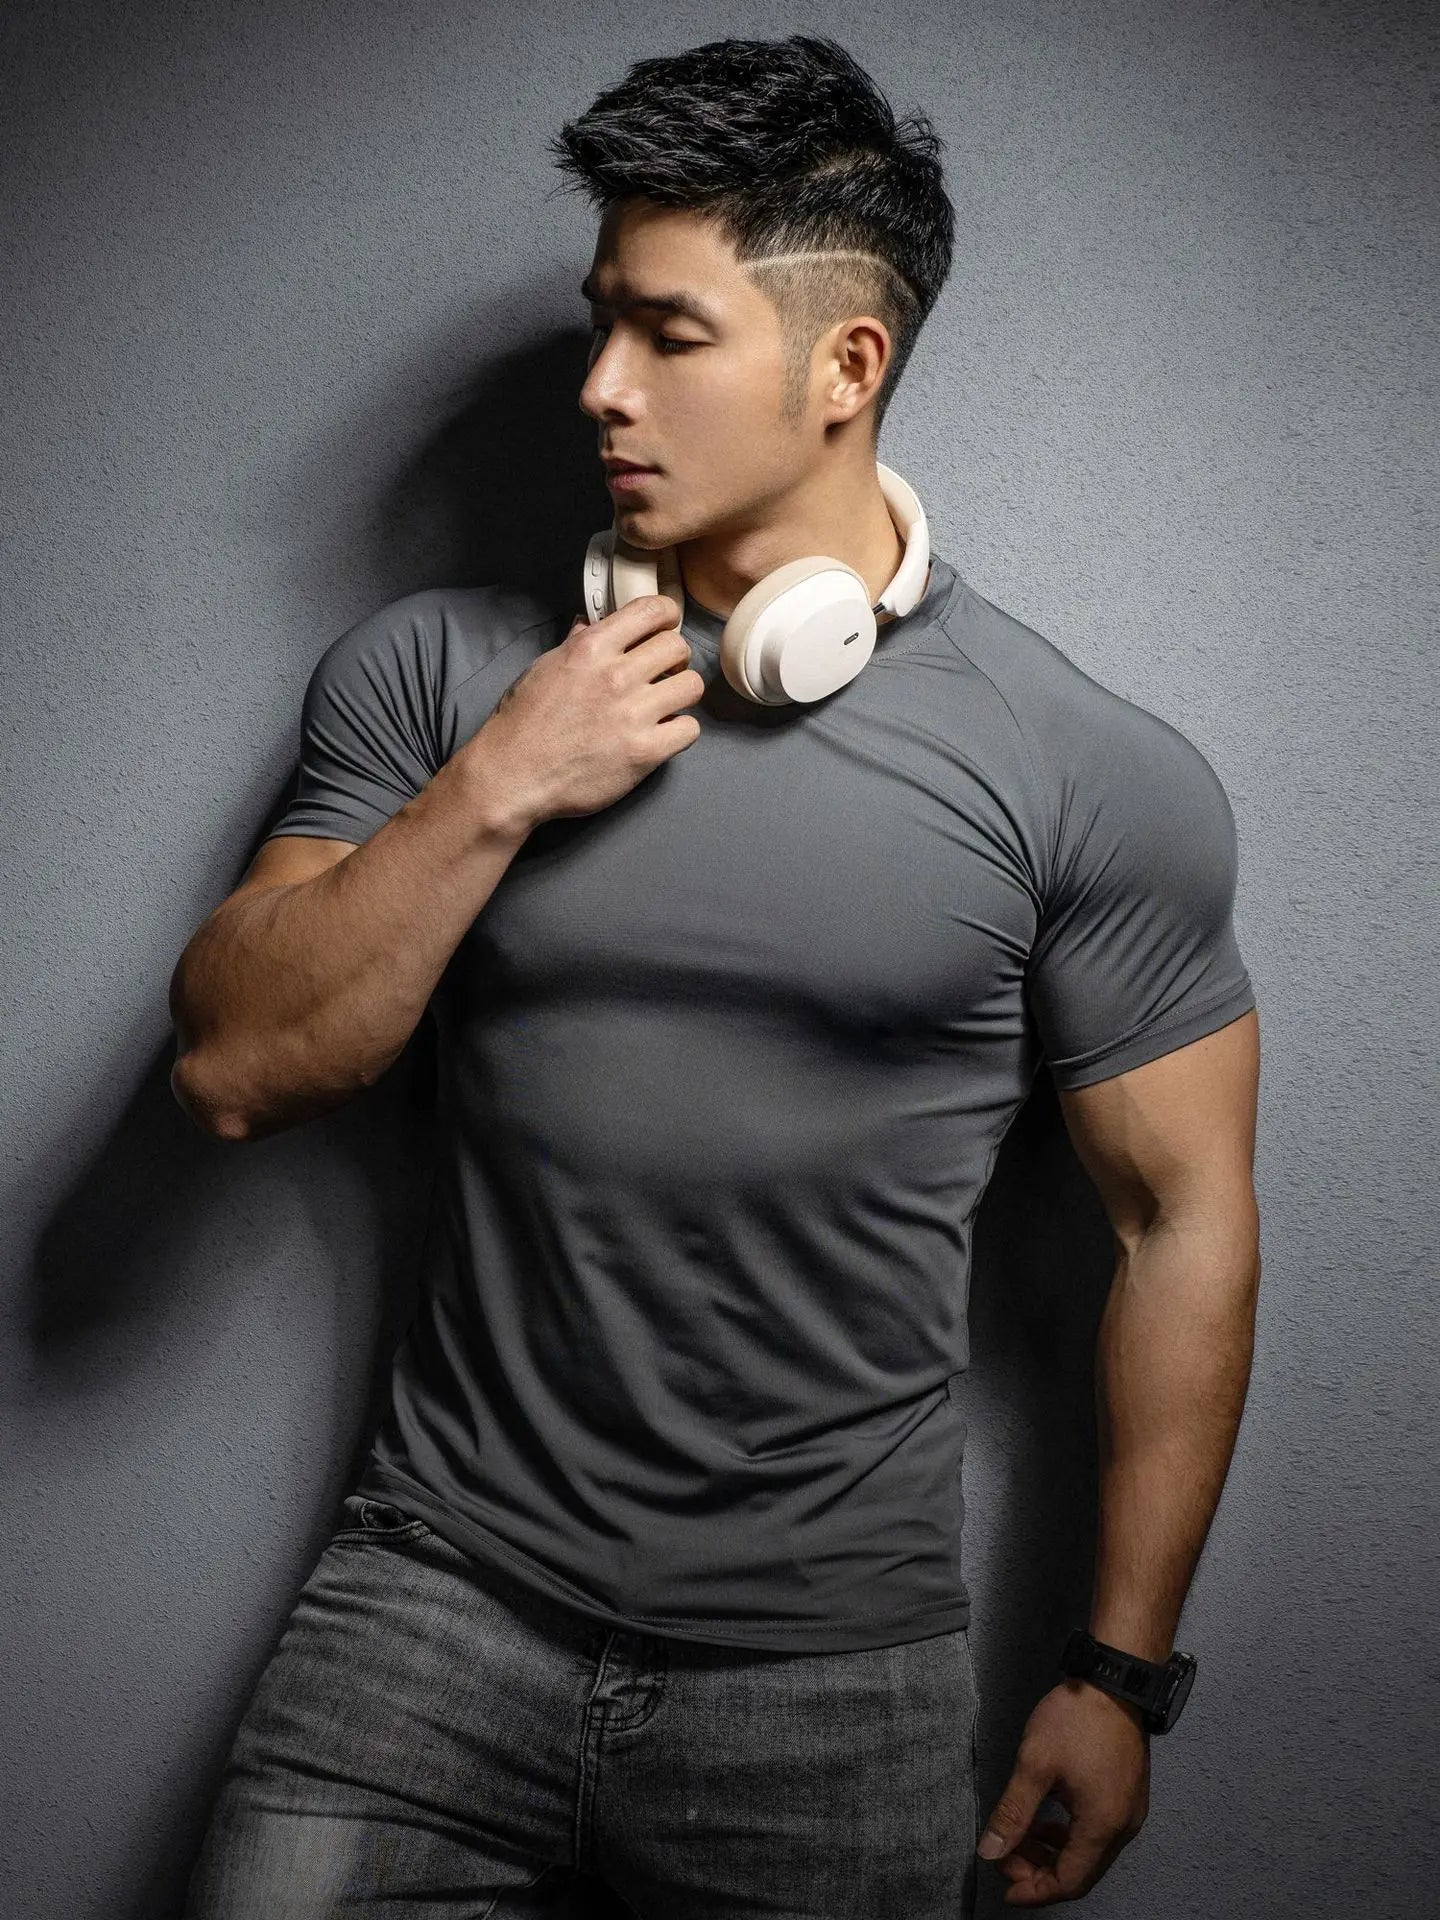  Stretchy quick drying short sleeve T-shirt for Men grey t-shirt